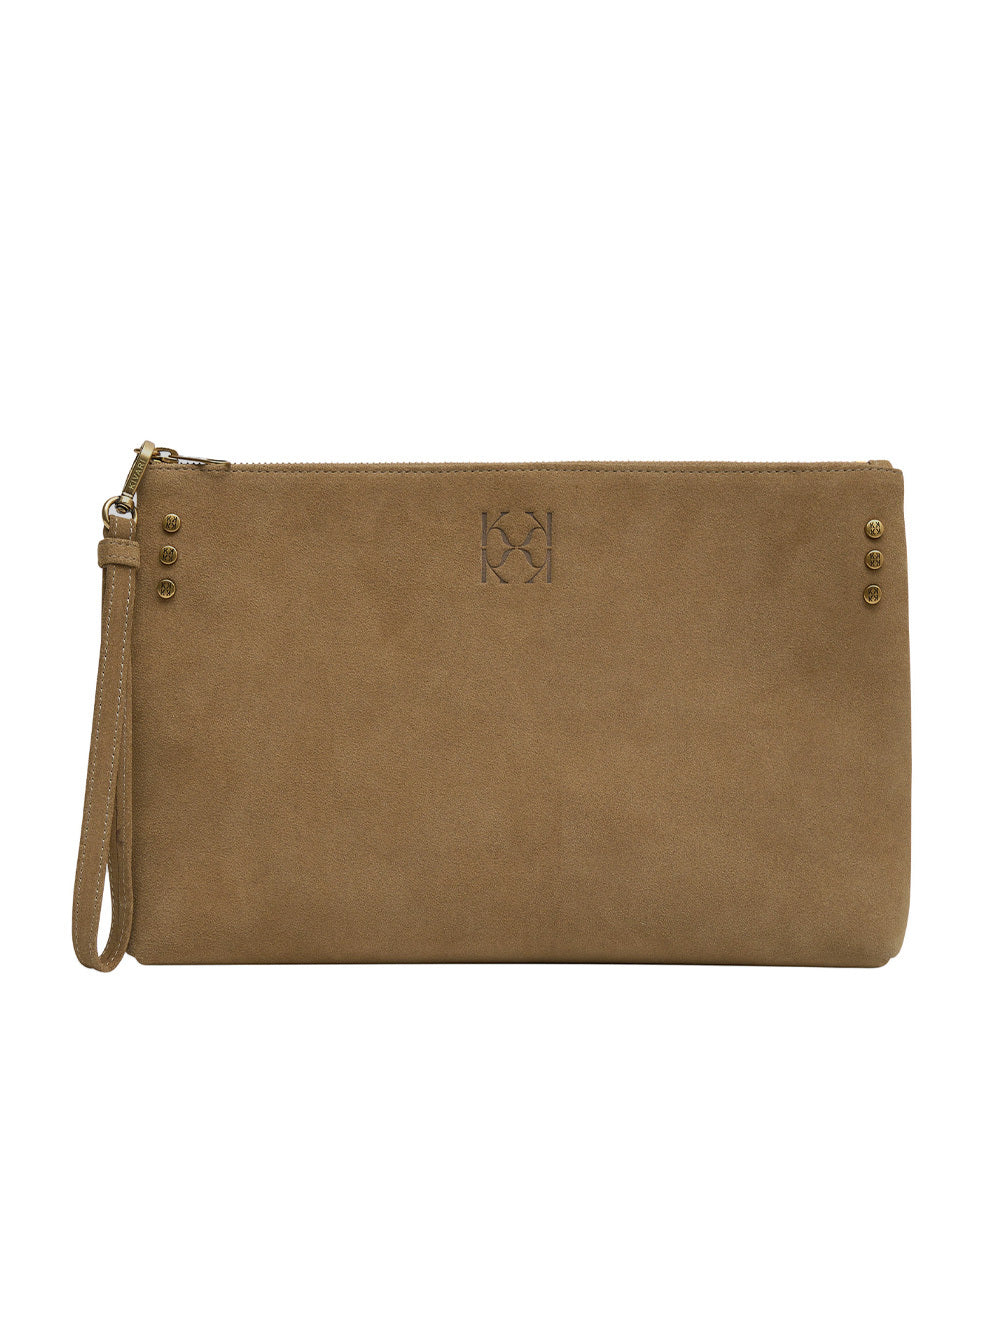 Leopard Print Oversize Clutch Bag Fold over Wristlet Purse | Oversized  clutch bag, Brown crossbody purse, Clutch bag